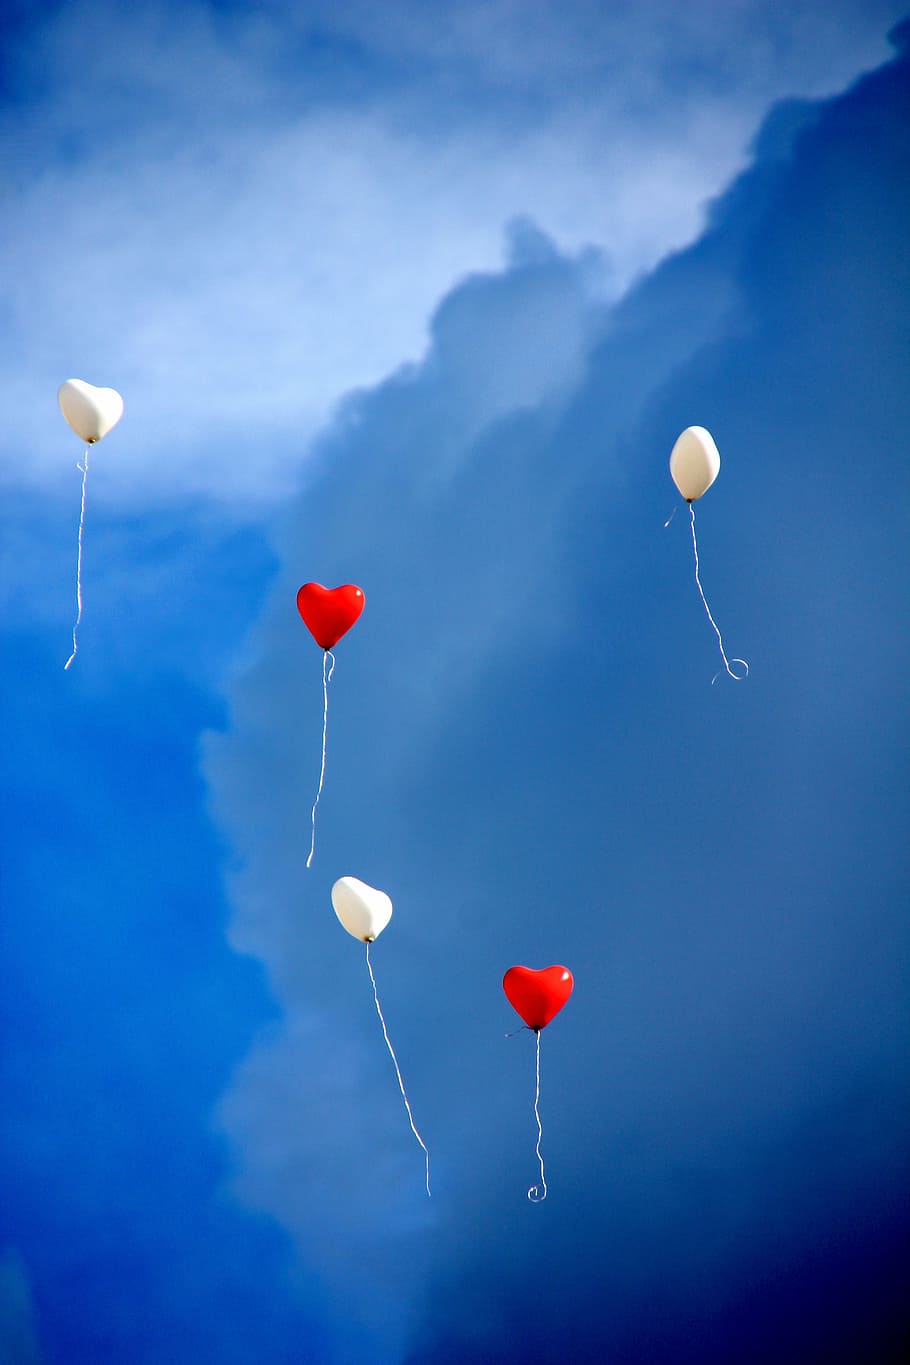 dua, merah, tiga, putih, balon jantung, langit, balon, hati, cinta, romansa